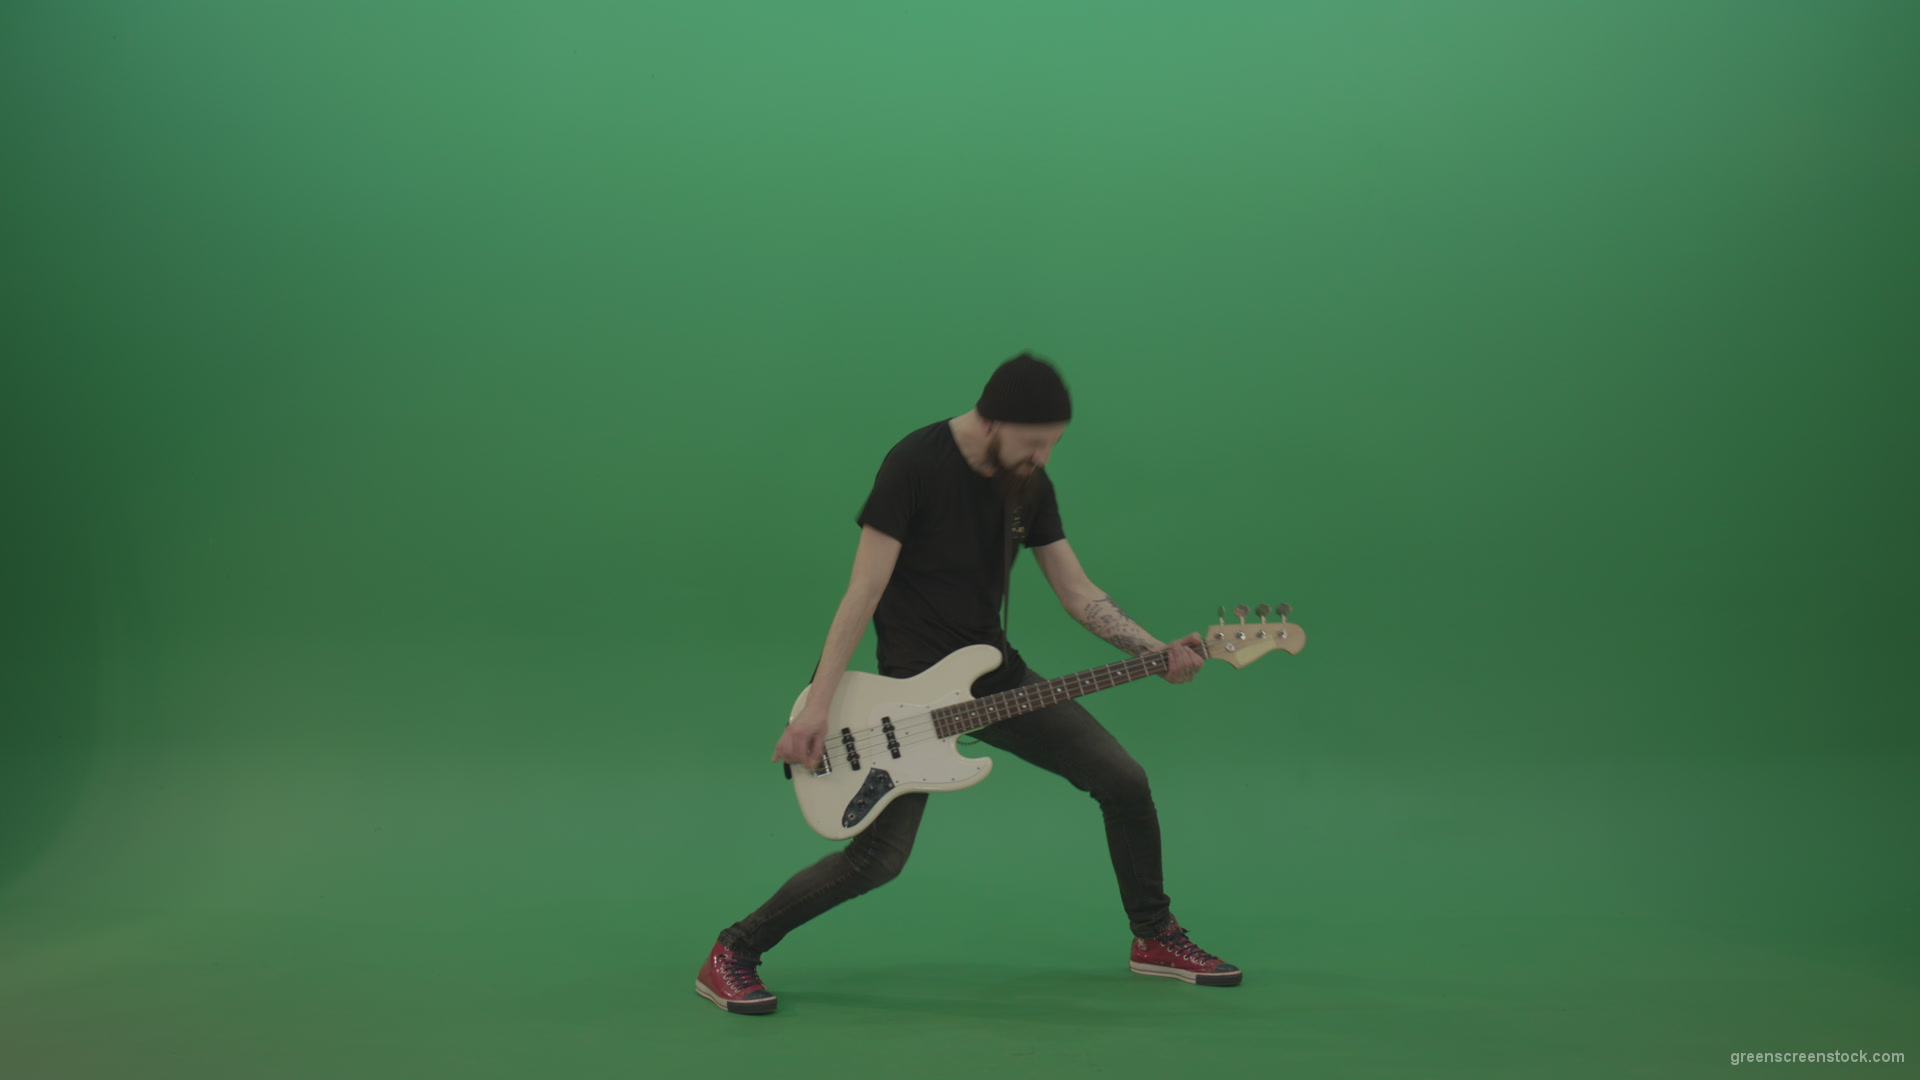 Man-enjoy-to-play-hard-rock-bass-guitar-isolated-on-green-screen-4k-footage_005 Green Screen Stock